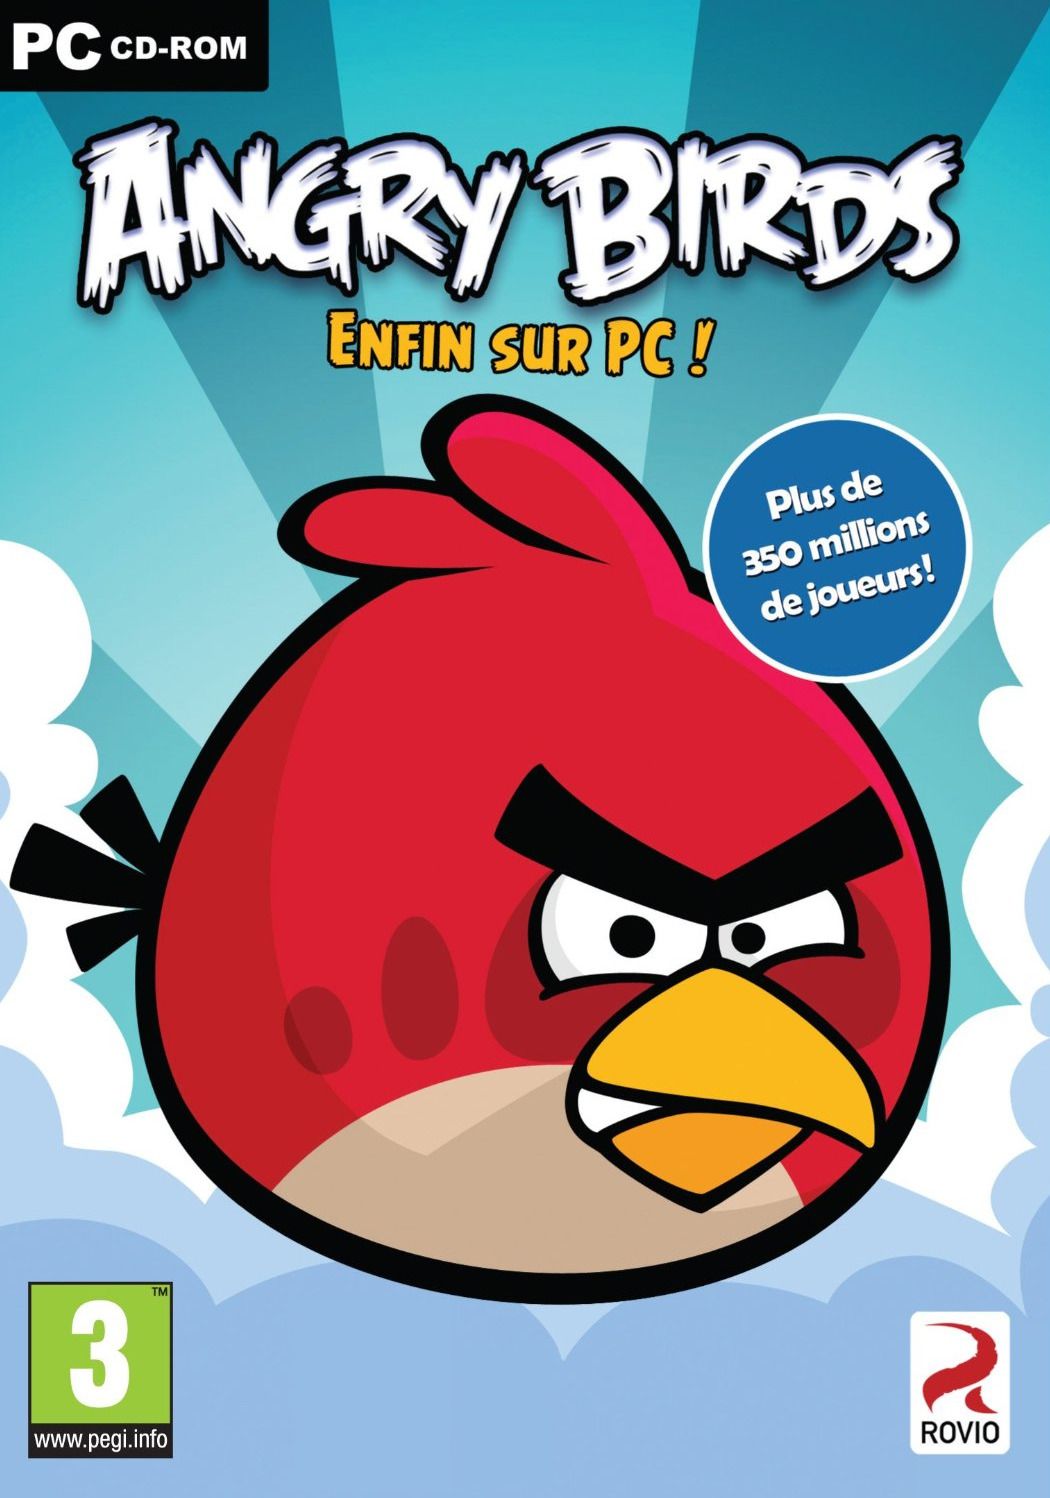 Игра птичка бердз. Angry Birds игры Rovio. Игра Angry Birds Classic. Игра злые птицы Angry Birds. Angry Birds новая игра.